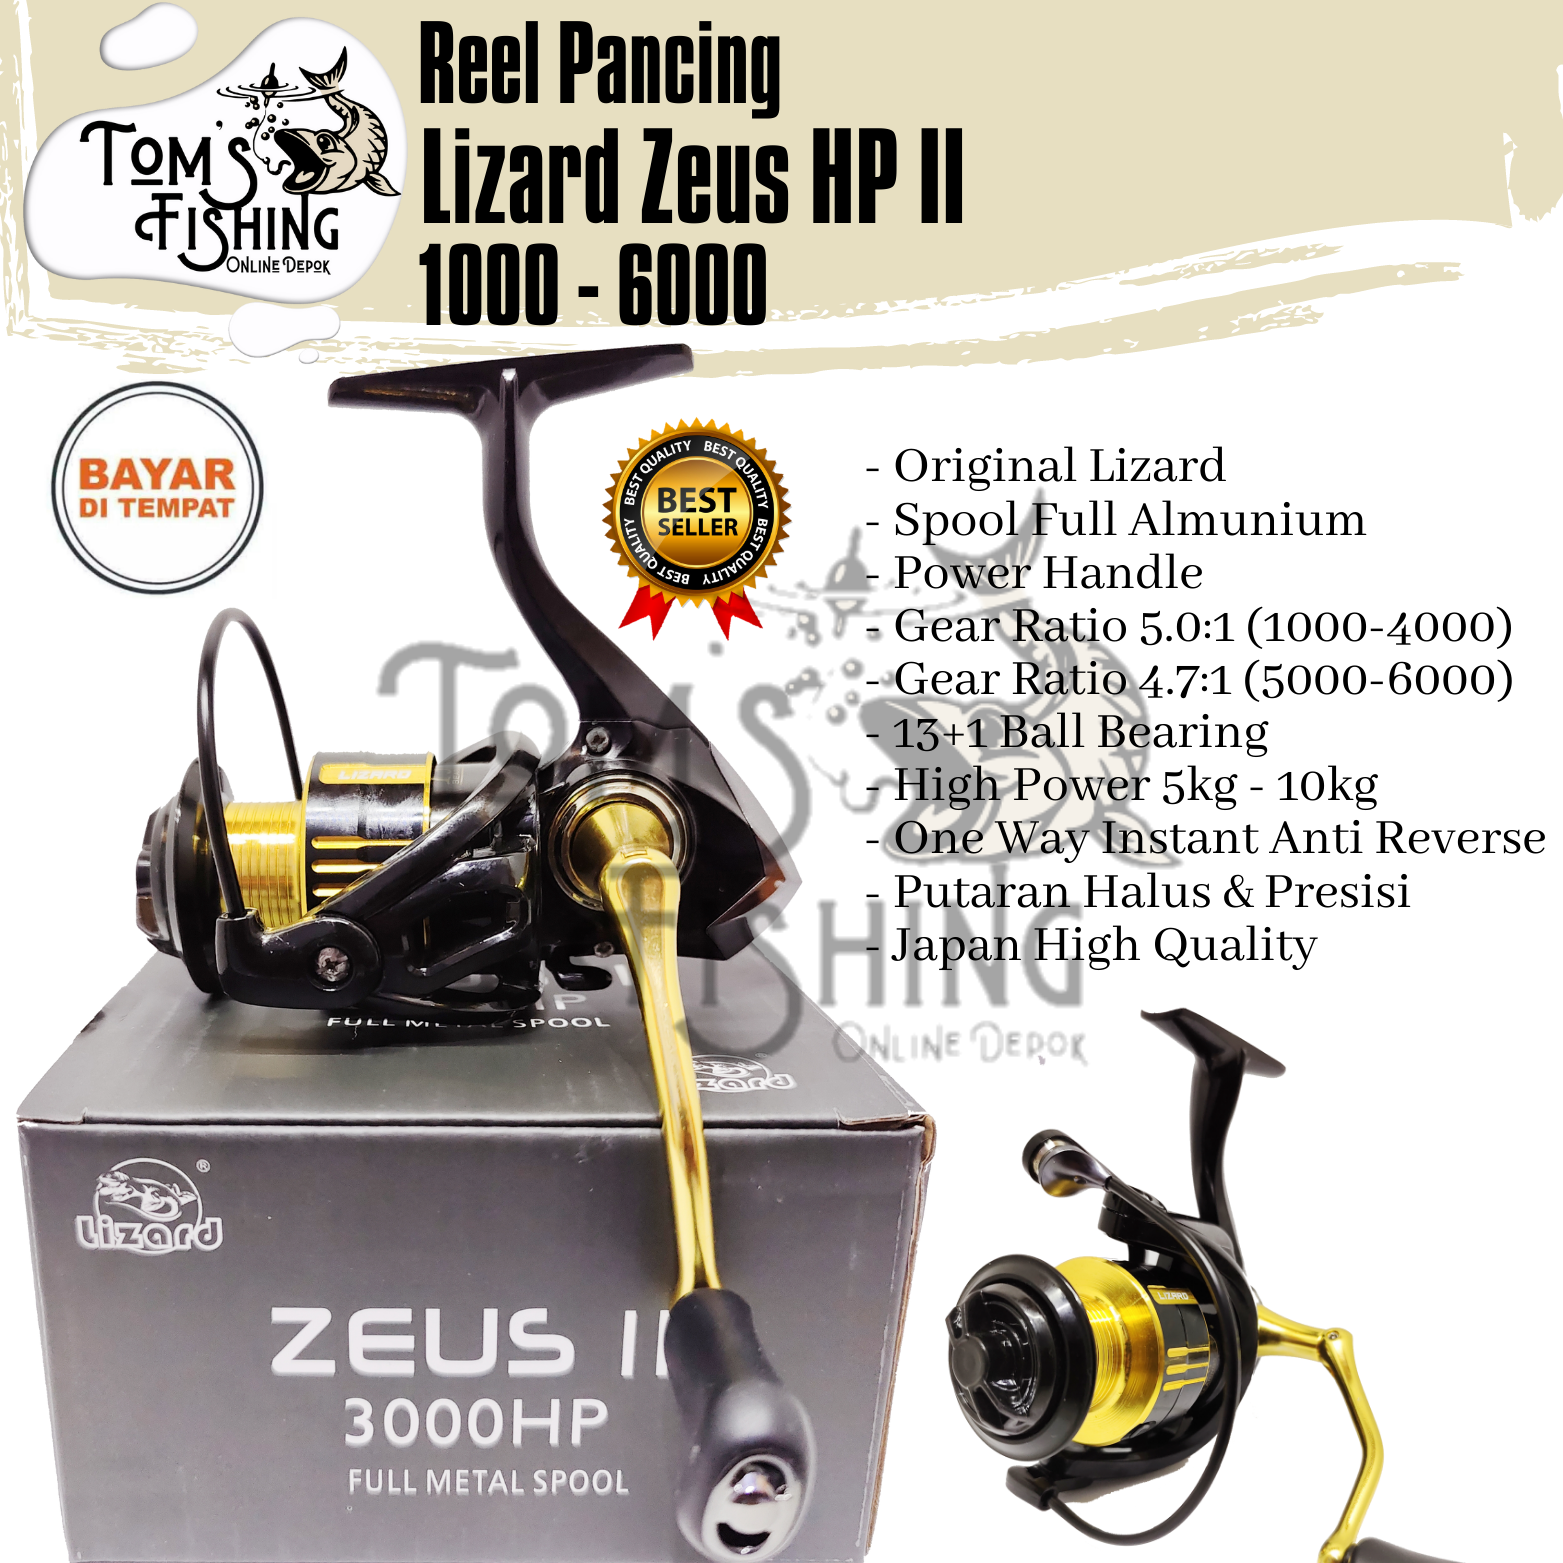 Reel Pancing Lizard Zeus HP 2 II 1000 - 6000 (13+1 Bearing) Power